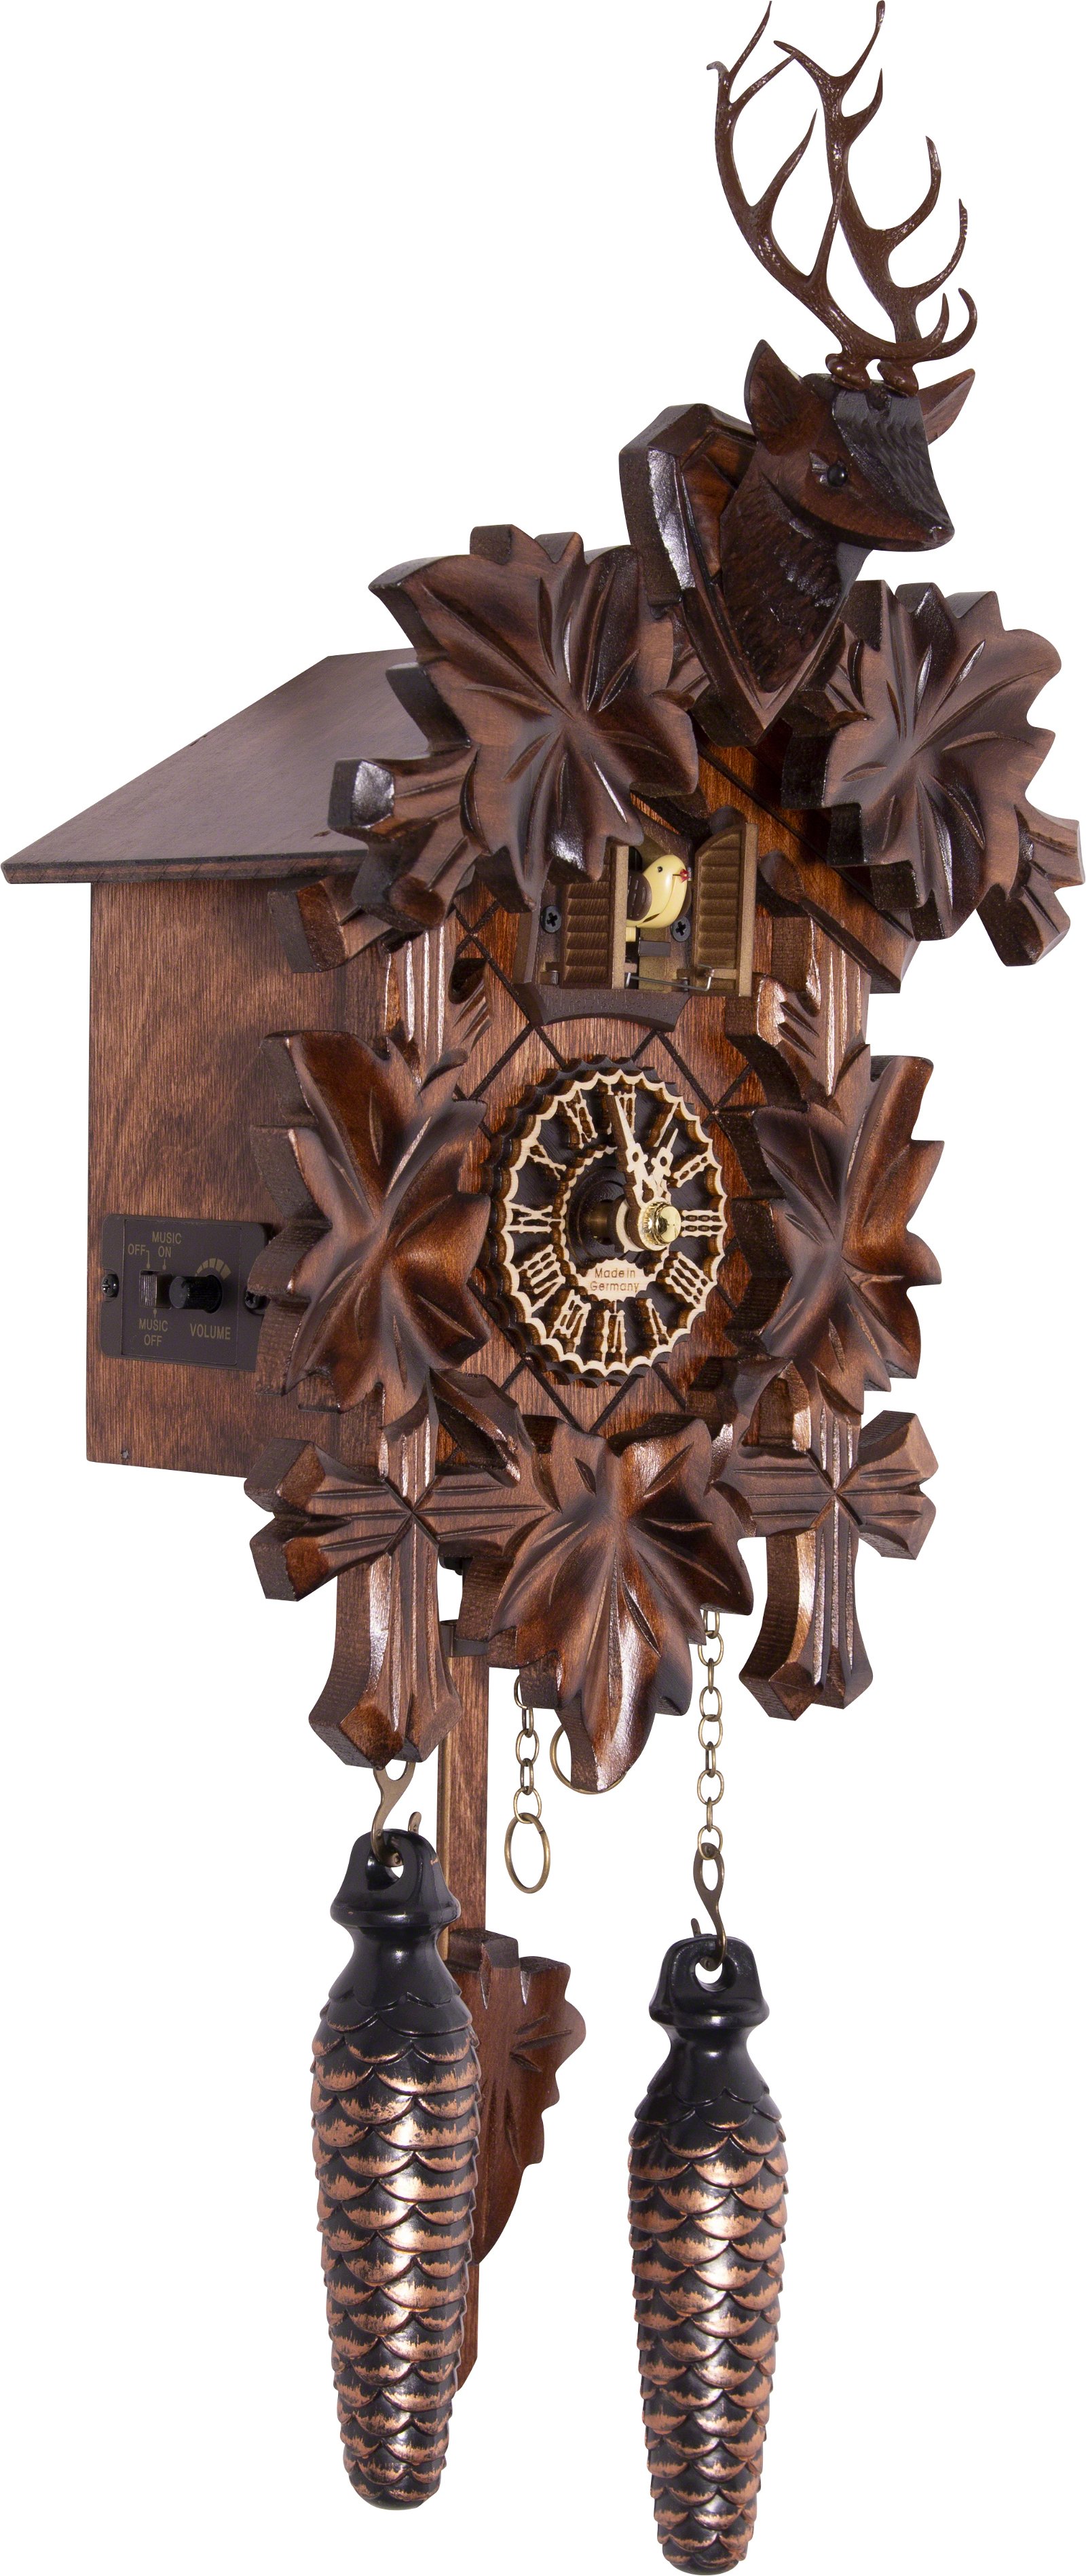 Reloj de cuco estilo “Madera tallada” de cuarzo 23cm de Trenkle Uhren